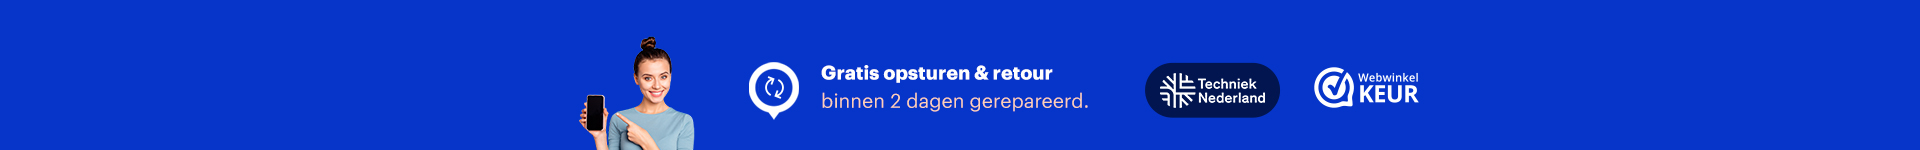 ReparatieCenter.nls achtergrond